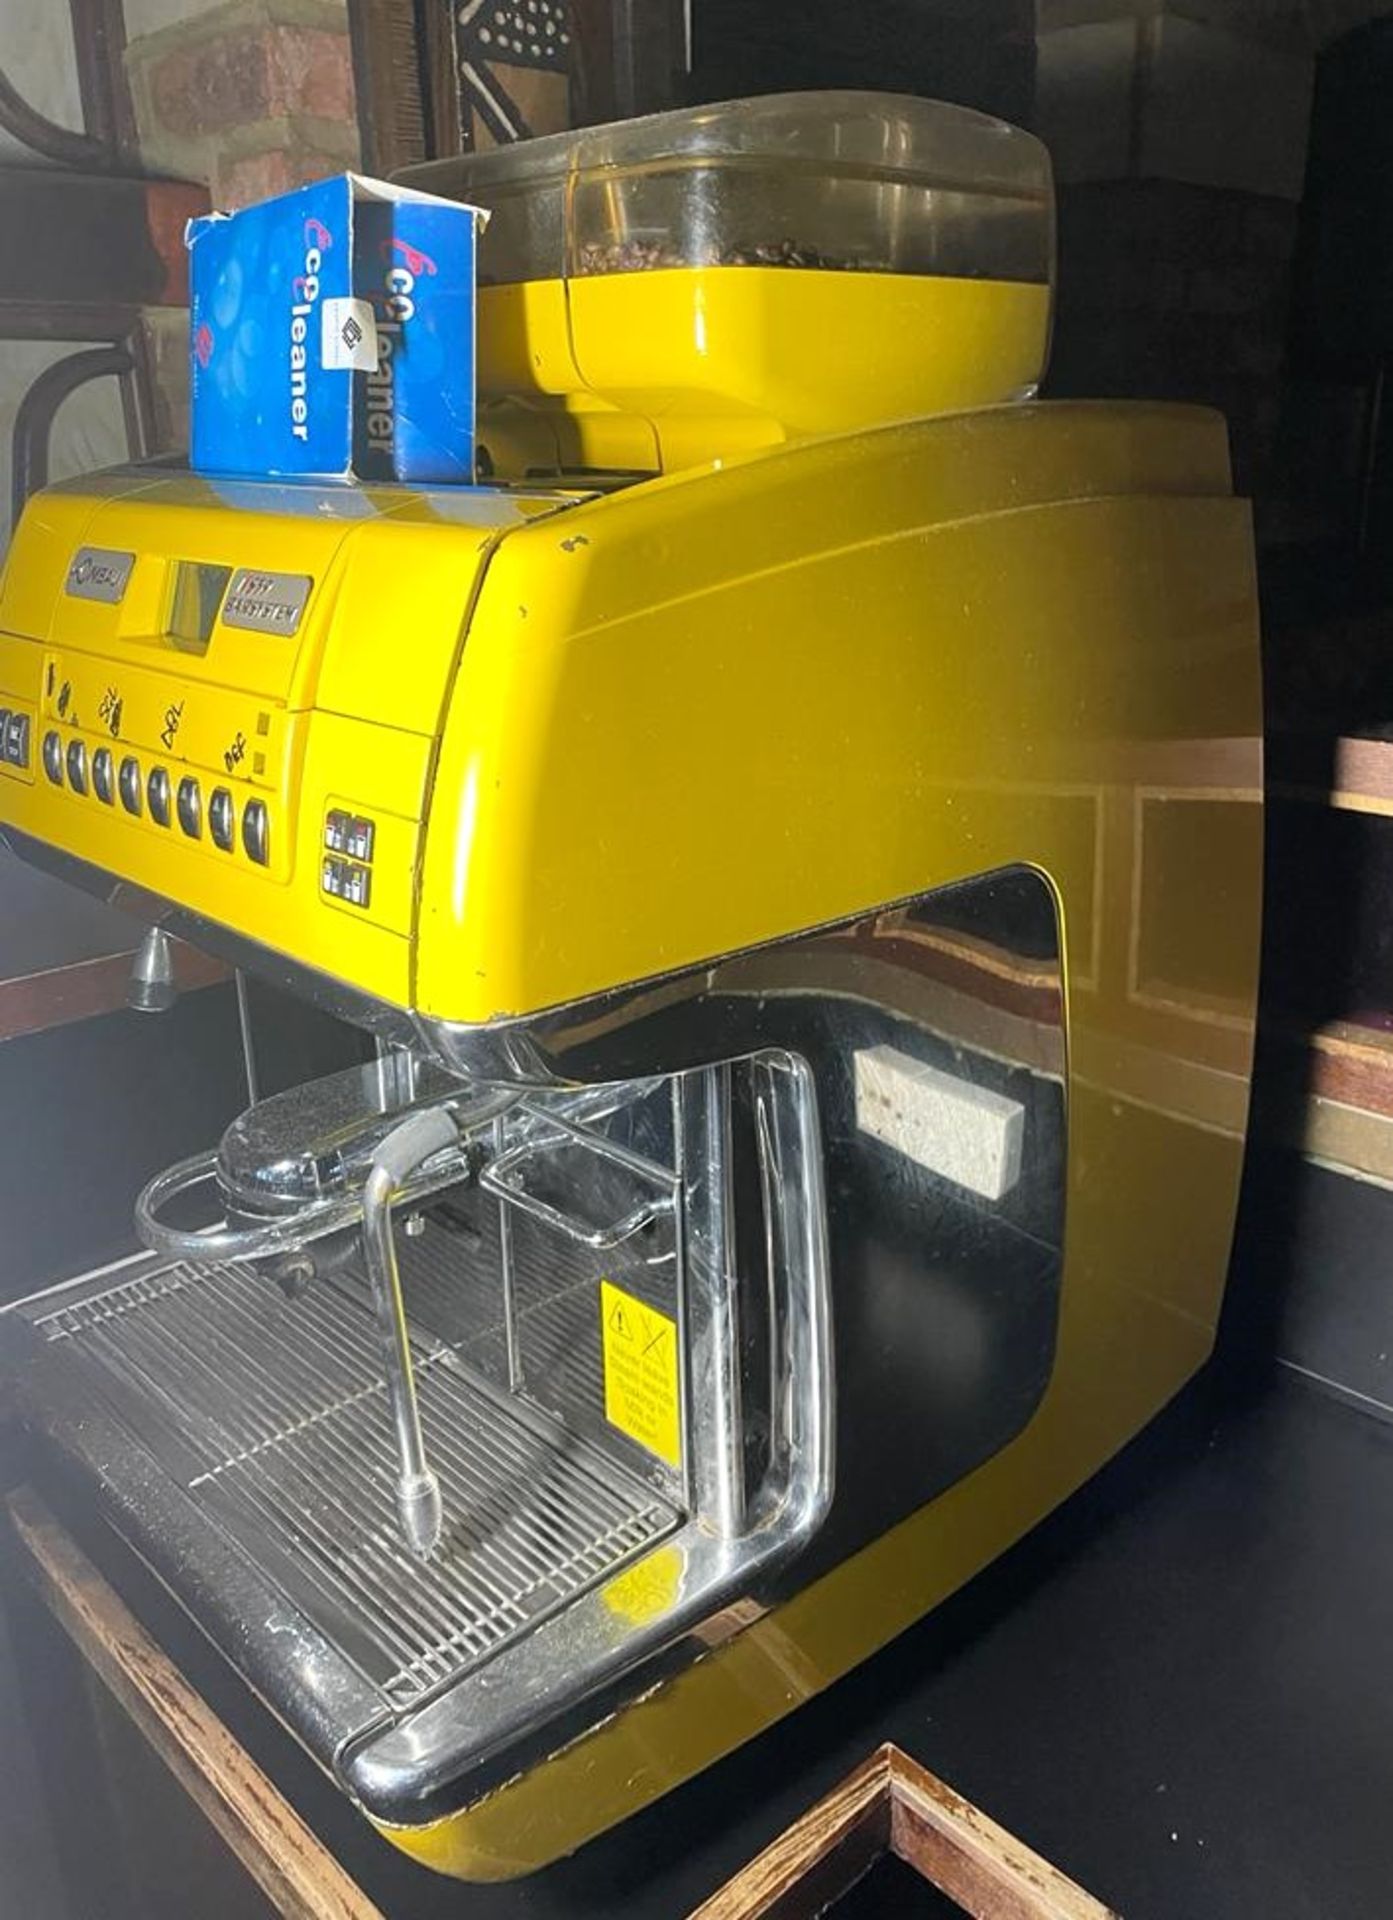 1 x La Cimbali S39 Barsystem Espresso Bean to Cup Coffee Machine - Bright Yellow Finish - 240V Plug - Image 6 of 14